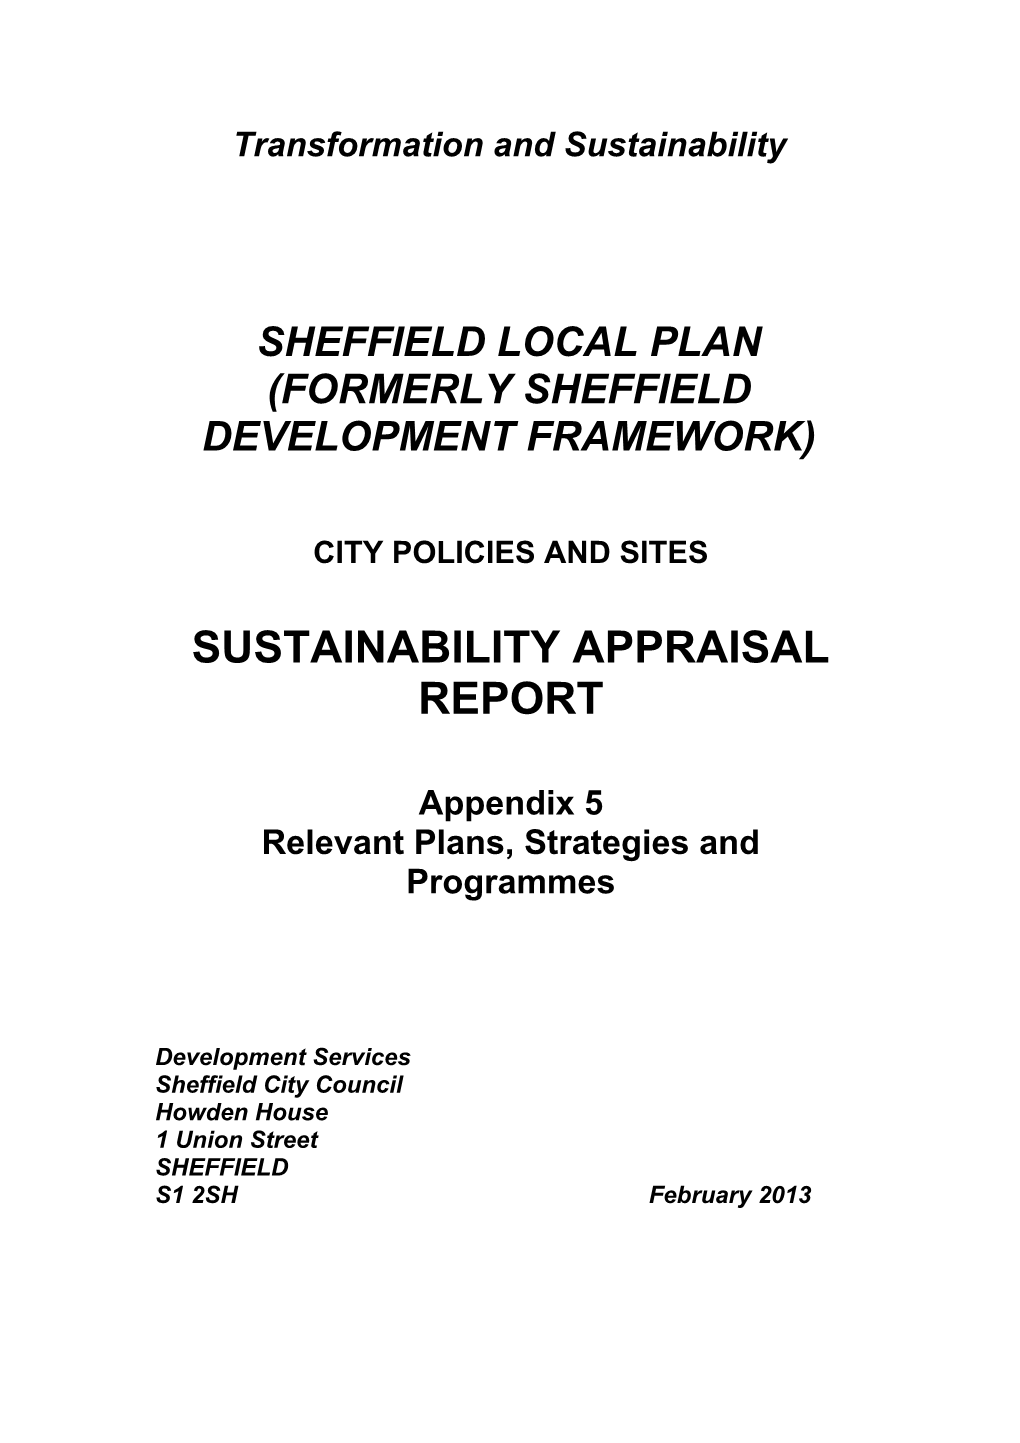 Sheffield Local Plan (Formerly Sheffield Development Framework)